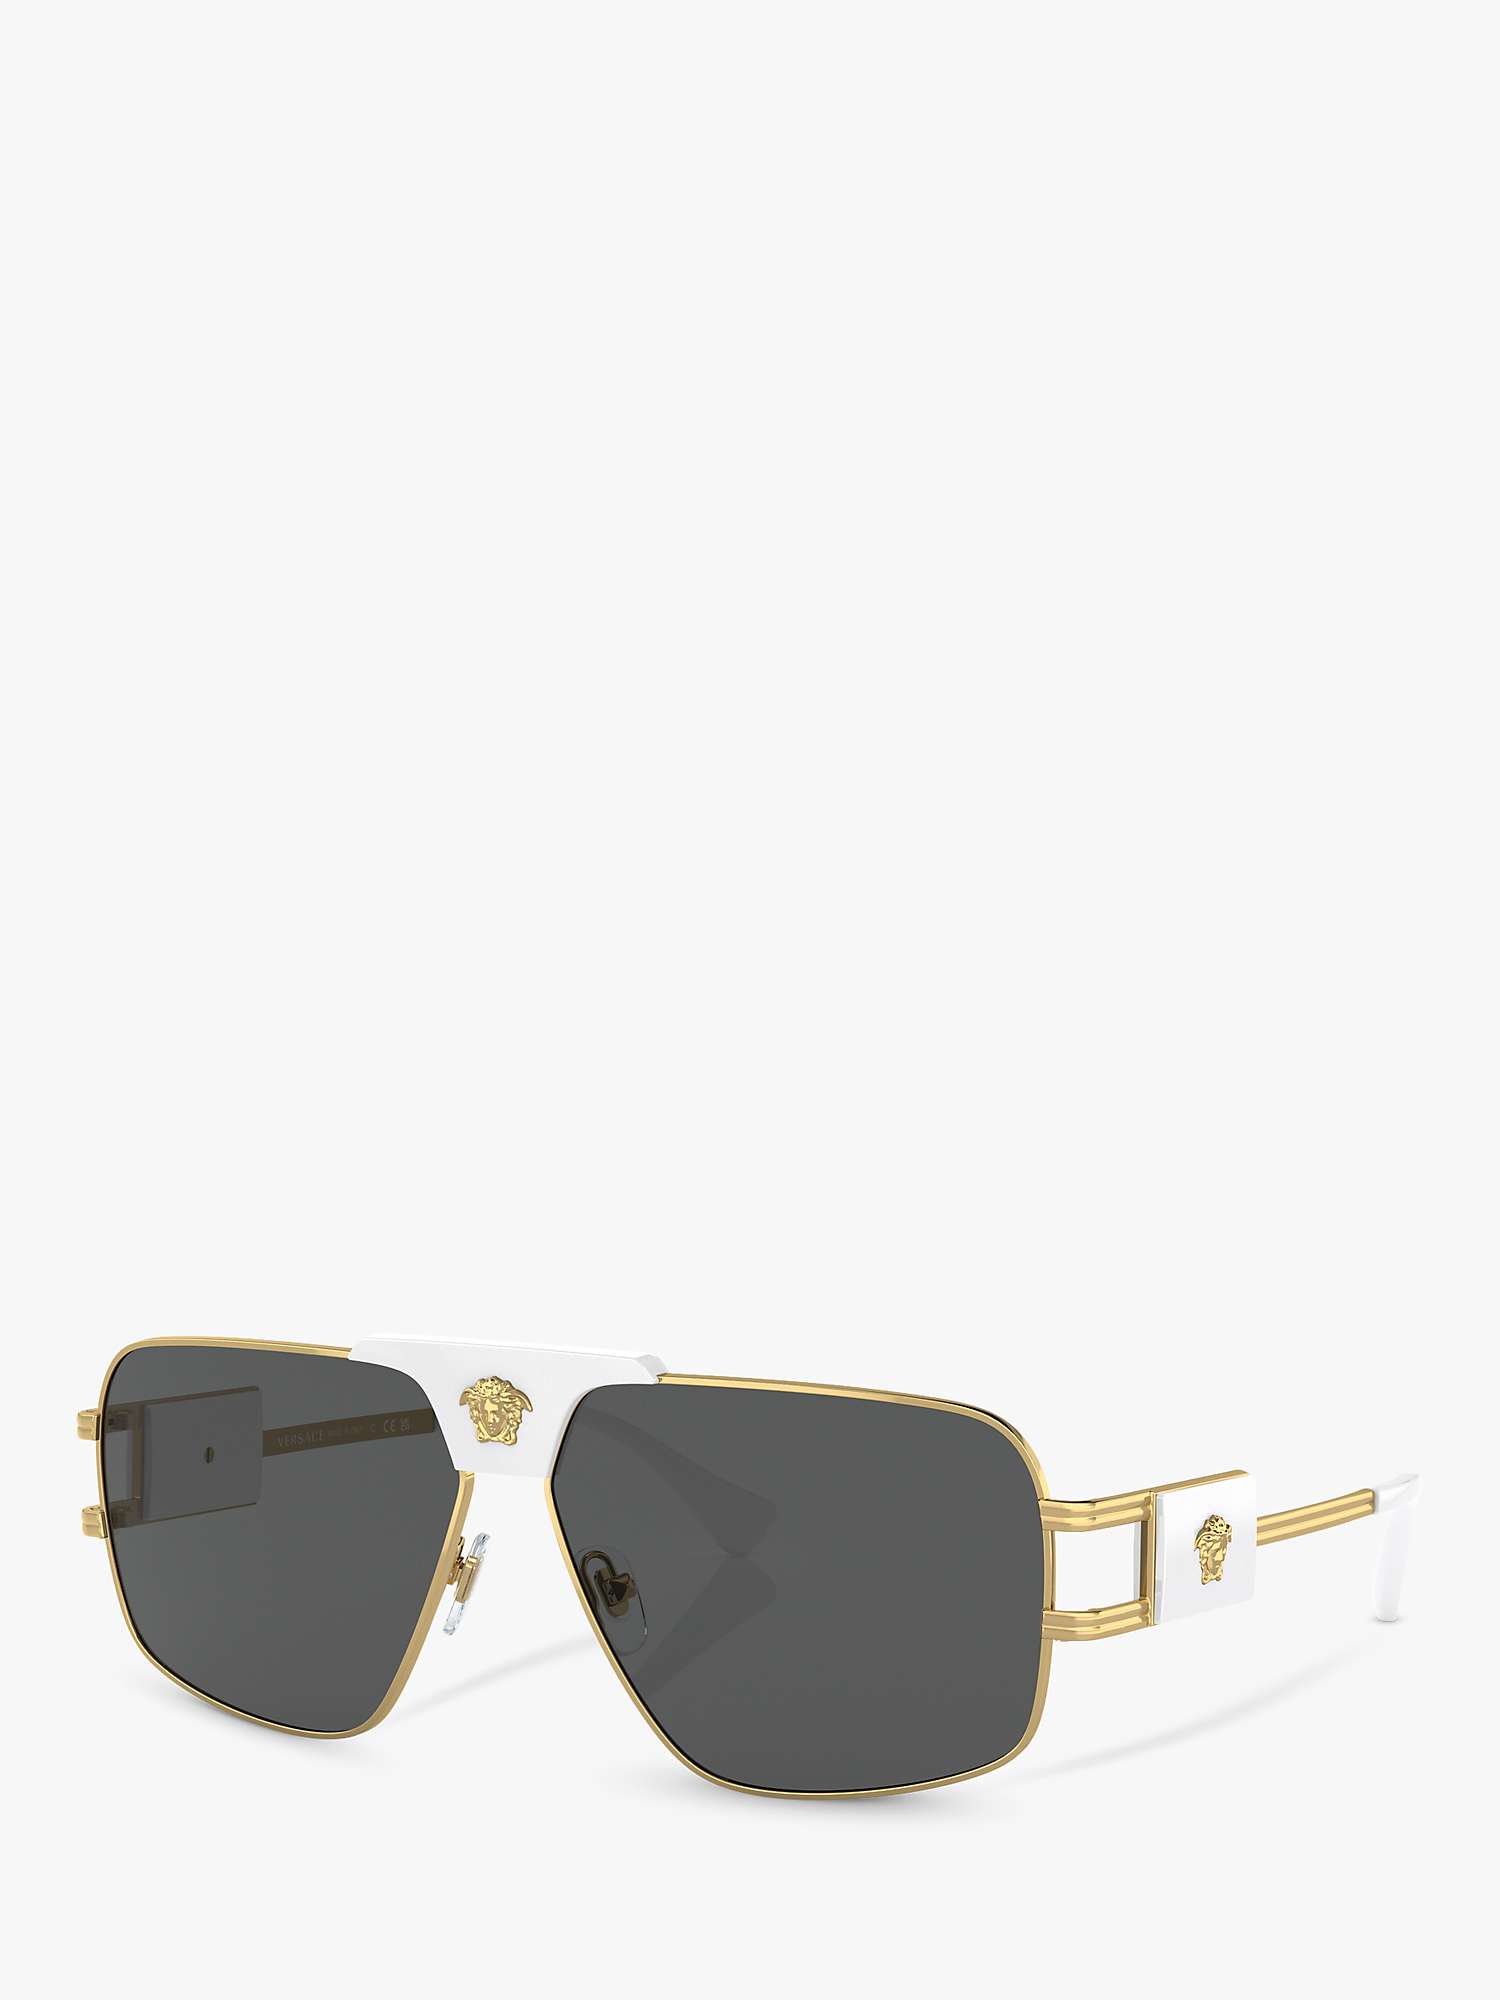 Buy Versace VE2251 Men's Aviator Sunglasses, White/Gold Online at johnlewis.com